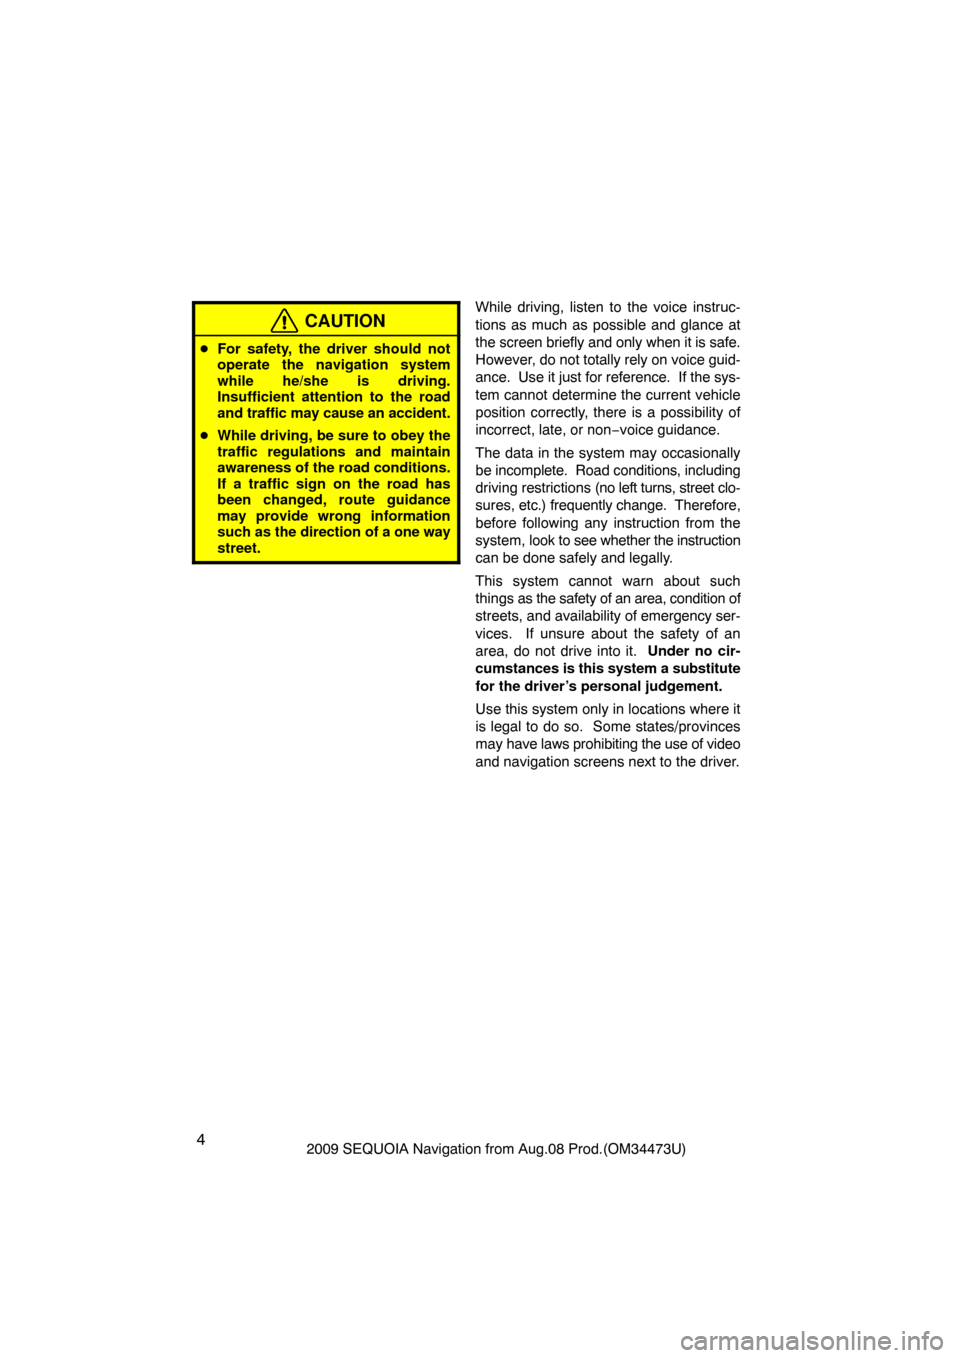 TOYOTA SEQUOIA 2009 2.G Navigation Manual 42009 SEQUOIA Navigation from Aug.08 Prod.(OM34473U)
CAUTION
For safety, the driver should not
operate the navigation system
while he/she is driving.
Insufficient attention to the road
and traffic ma